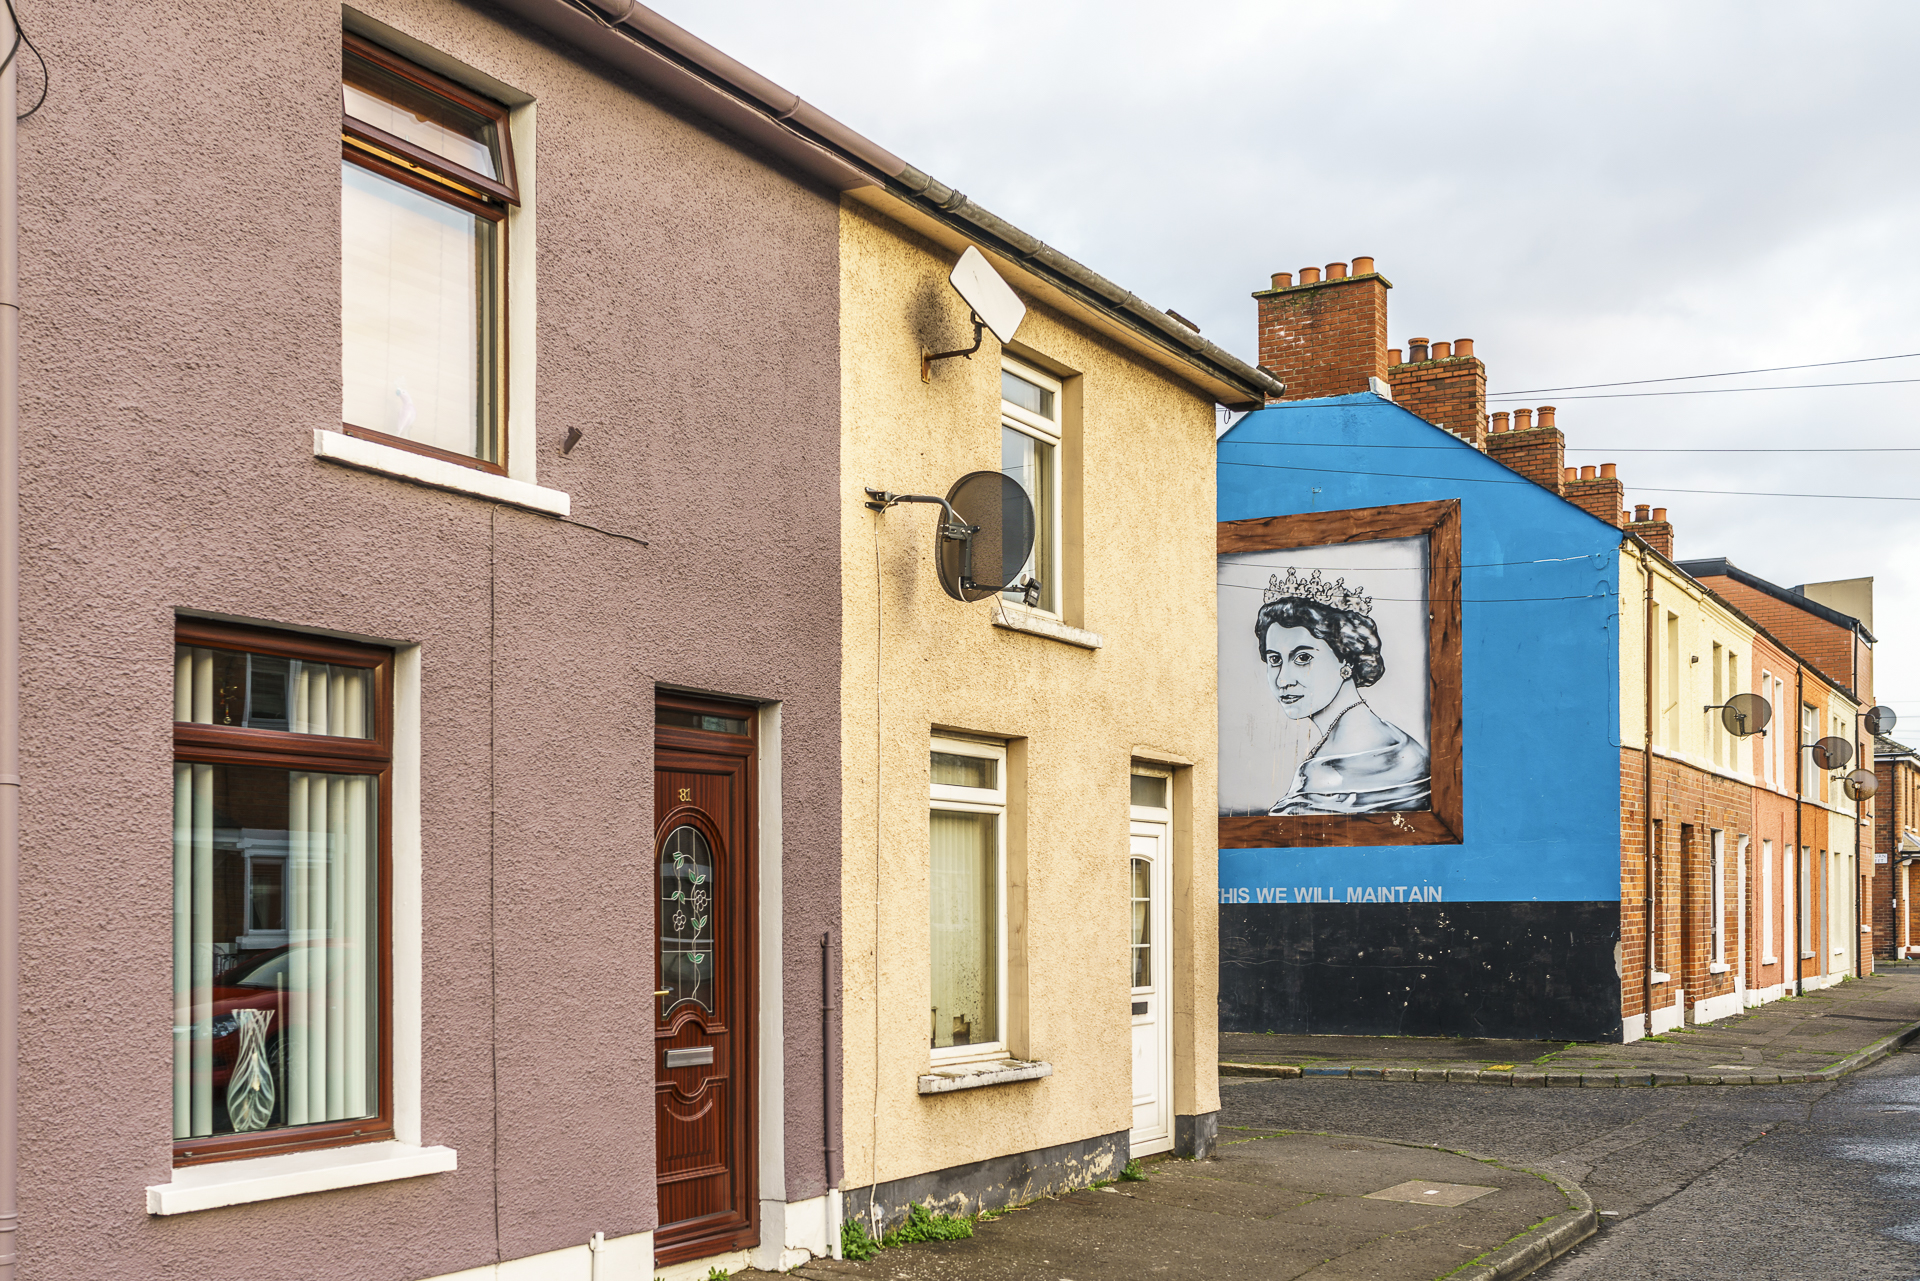 This will maintain Belfast Street Art